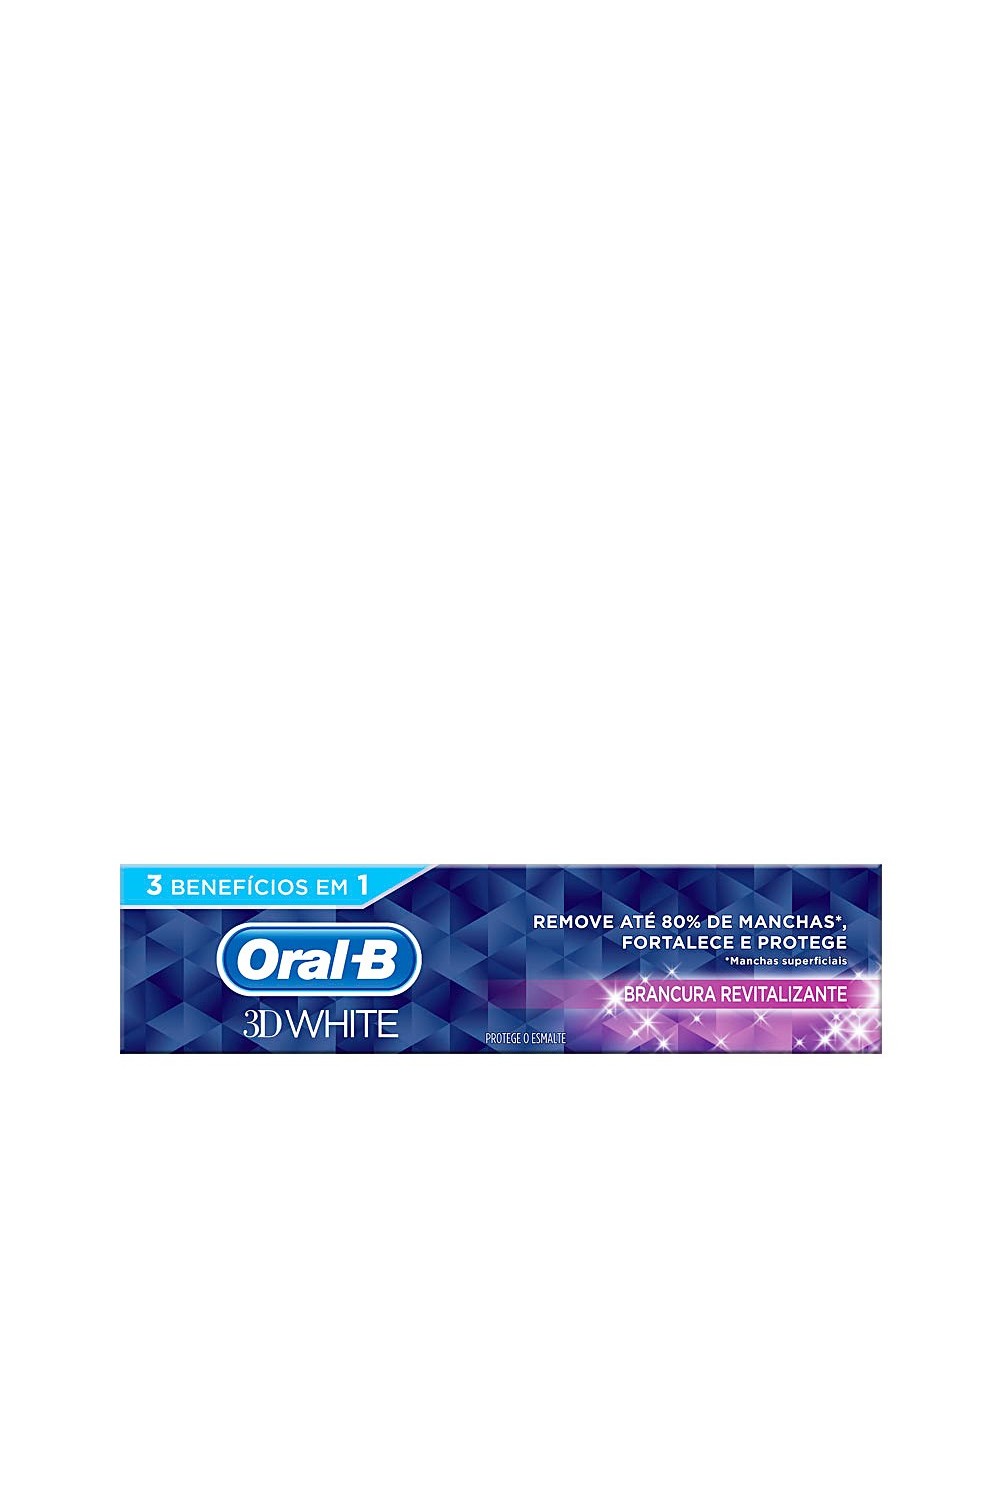 Oral-B 3D White Vitalizing Fresh Toothpaste 75ml